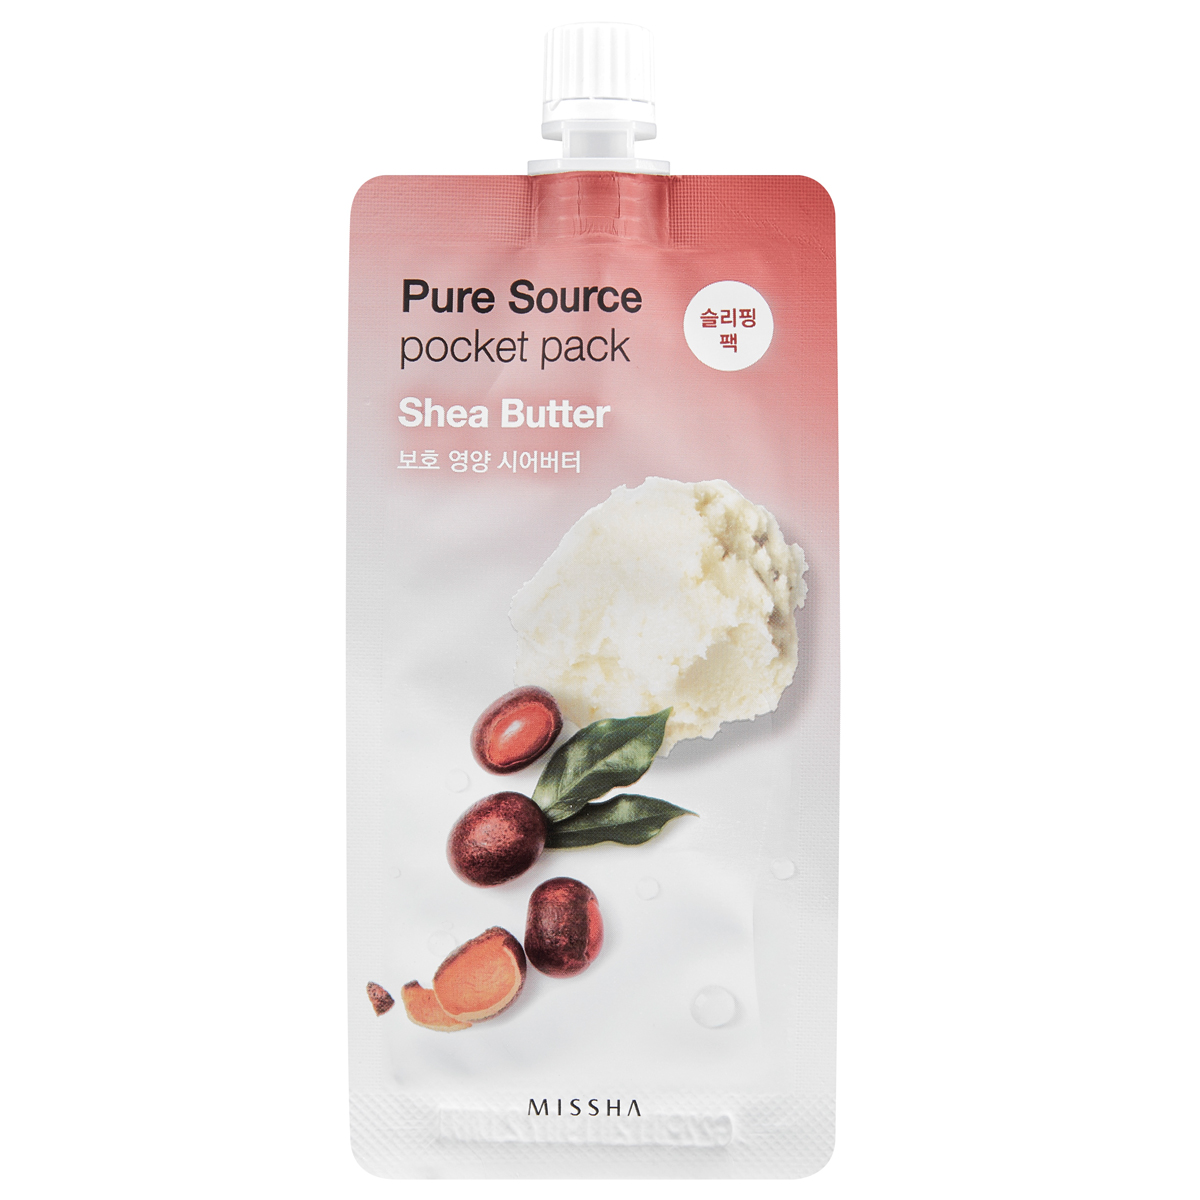 Pure Source Pocket Pack (Shea Butter),  MISSHA K Beauty Masker